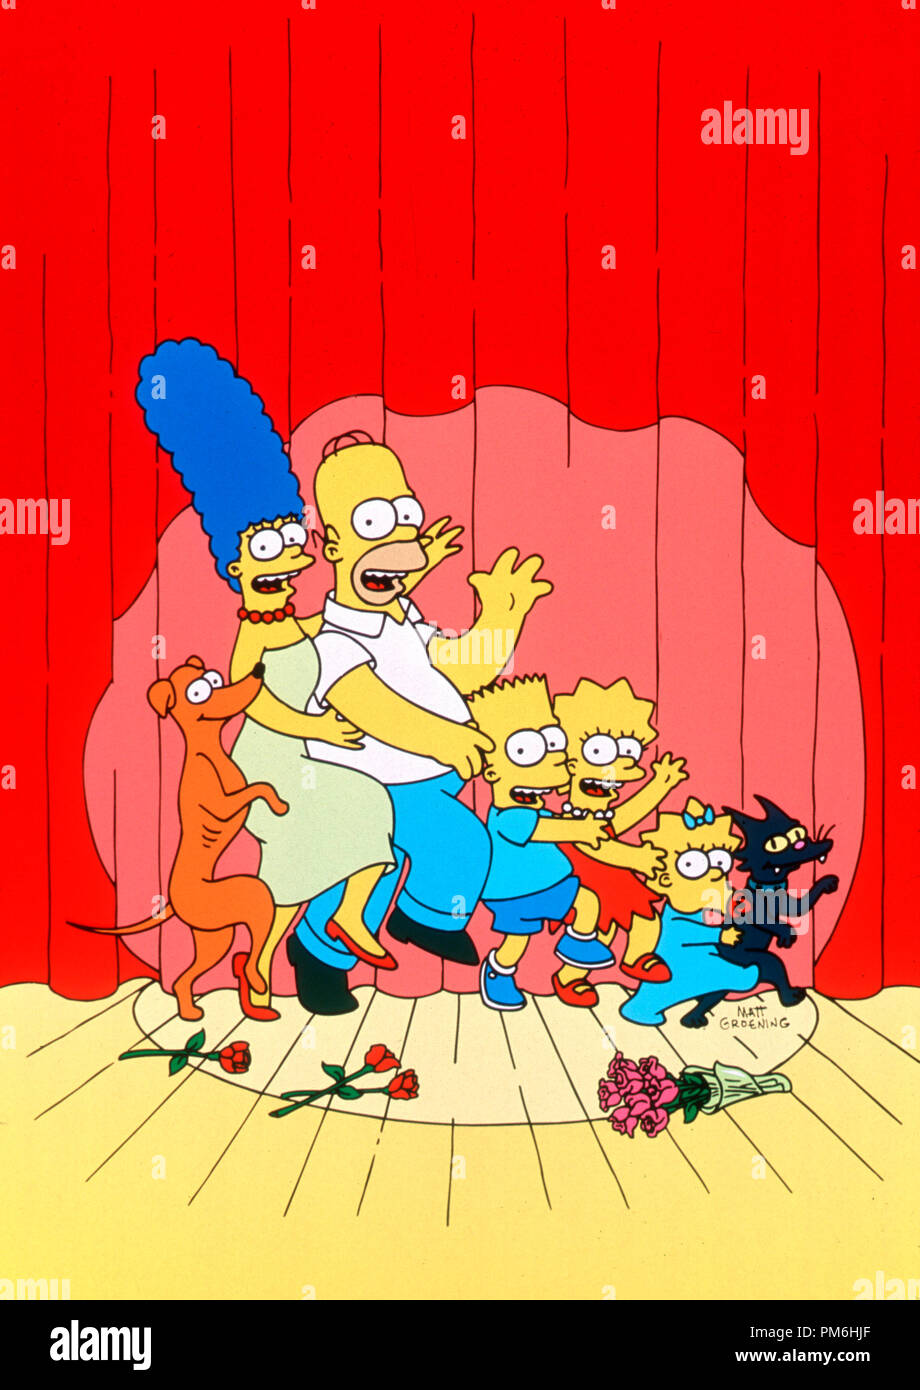 Film Still from 'The Simpsons' Cartoon Family 1999 Stock Photo